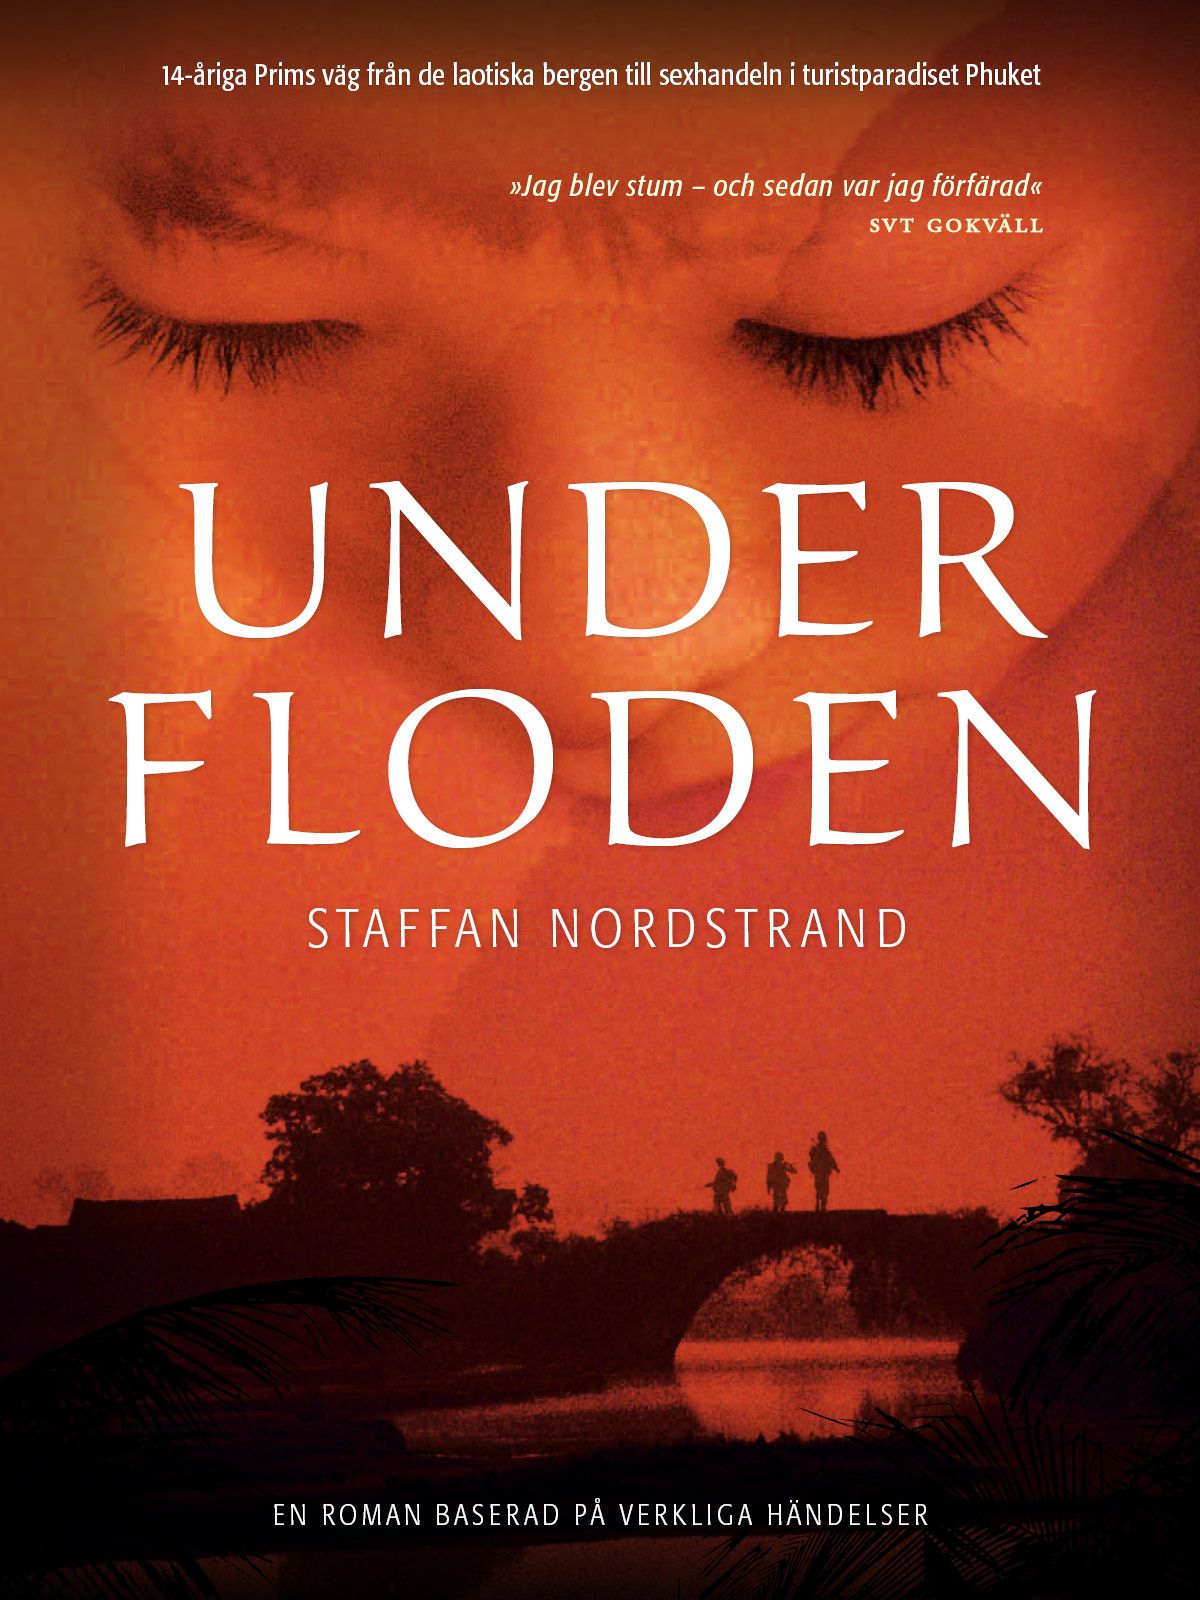 Under floden, eBook by Staffan Nordstrand